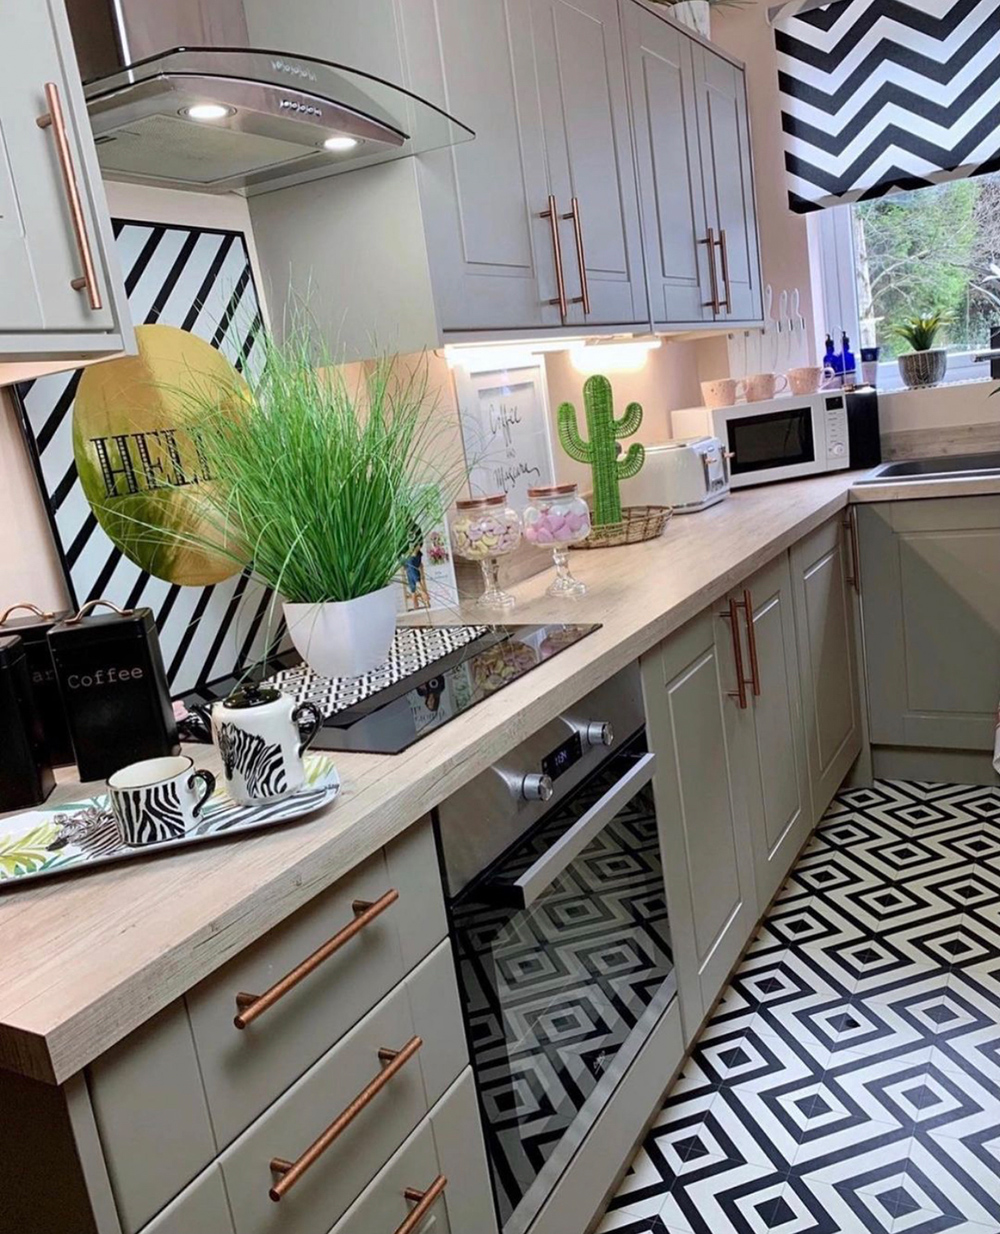 Monochrome vinyl patterned floor - contemporary kitchen design